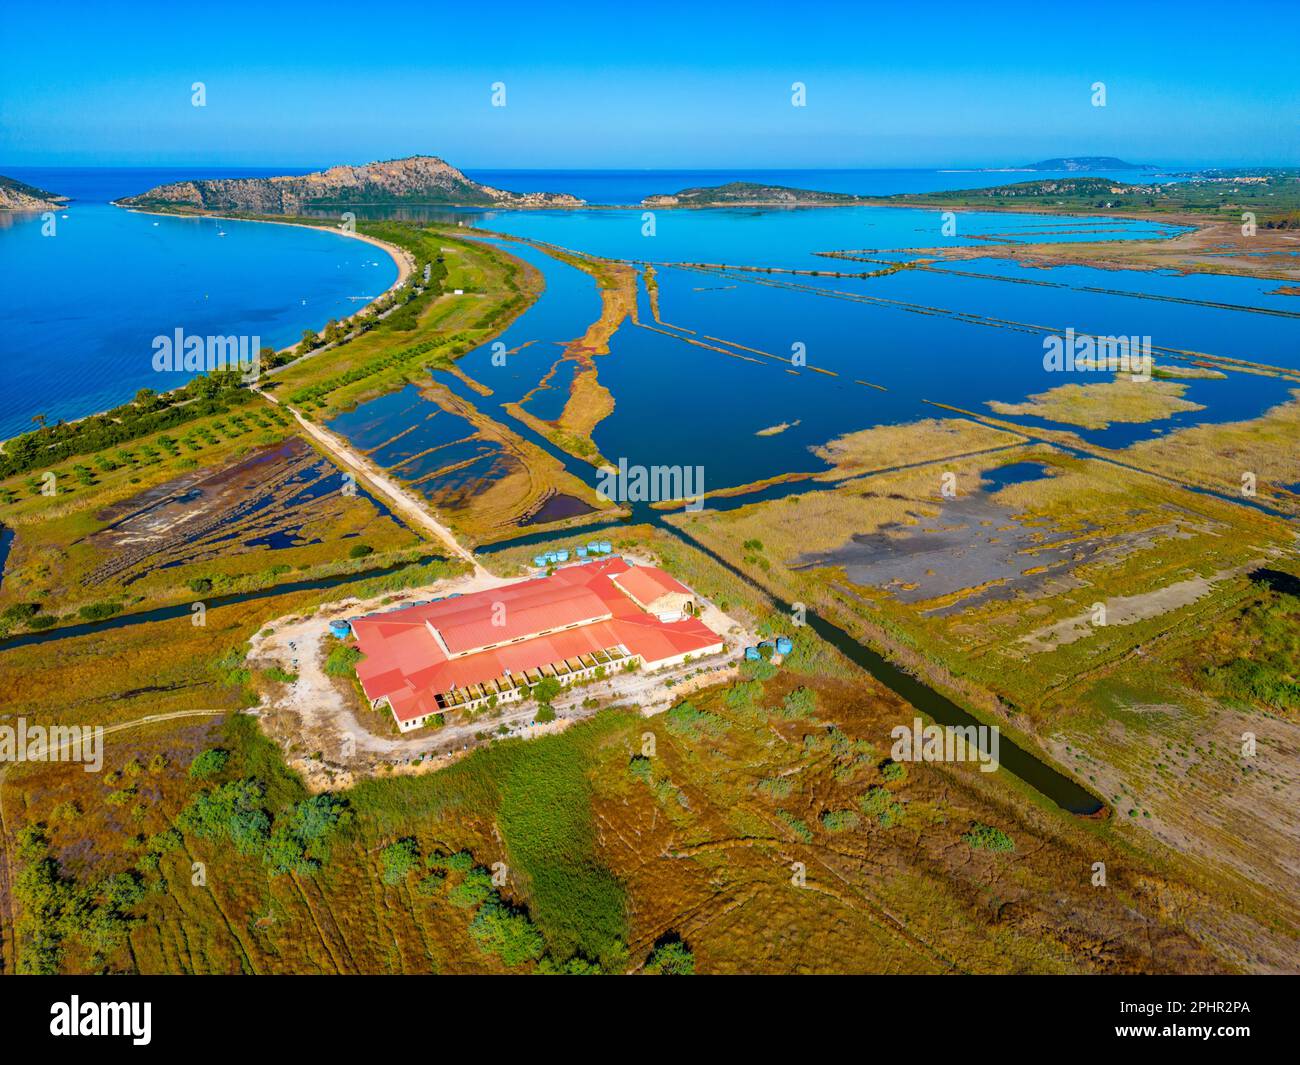 Aerial view of Limni Divari lagoon in Greece. Stock Photo